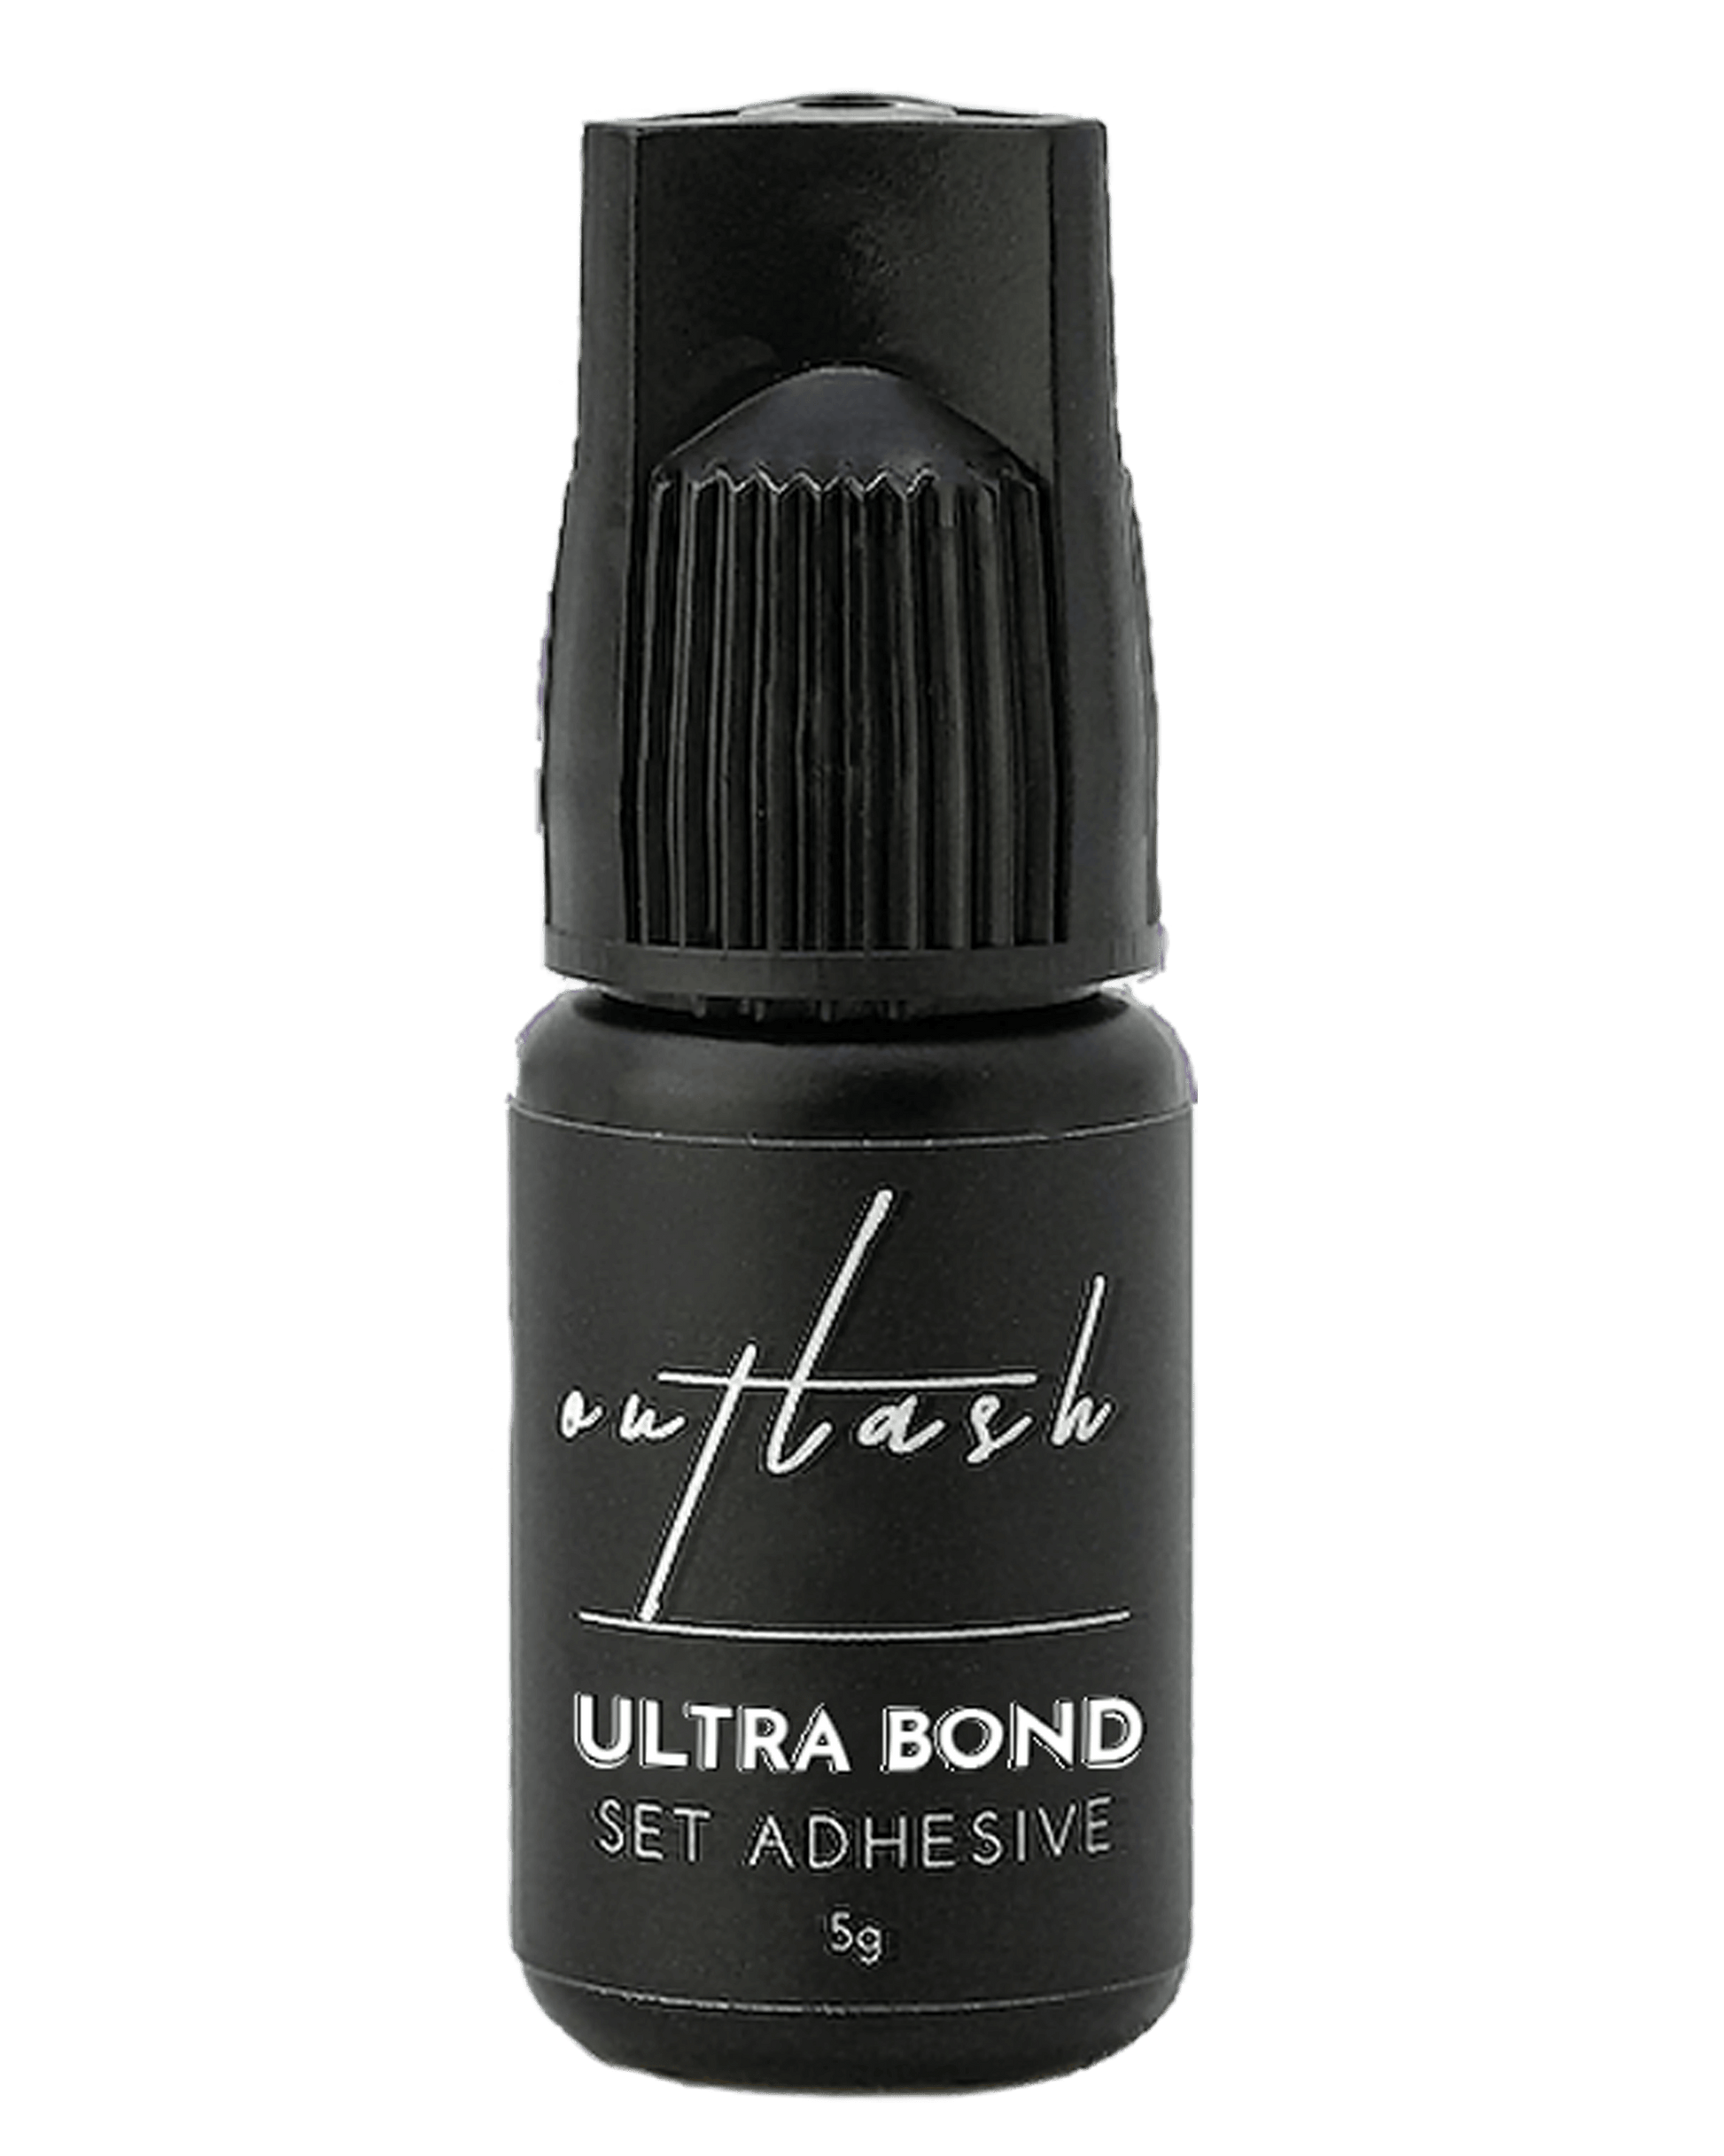 Ultra Bond Lash Extensions Adhesive | Lash Glue